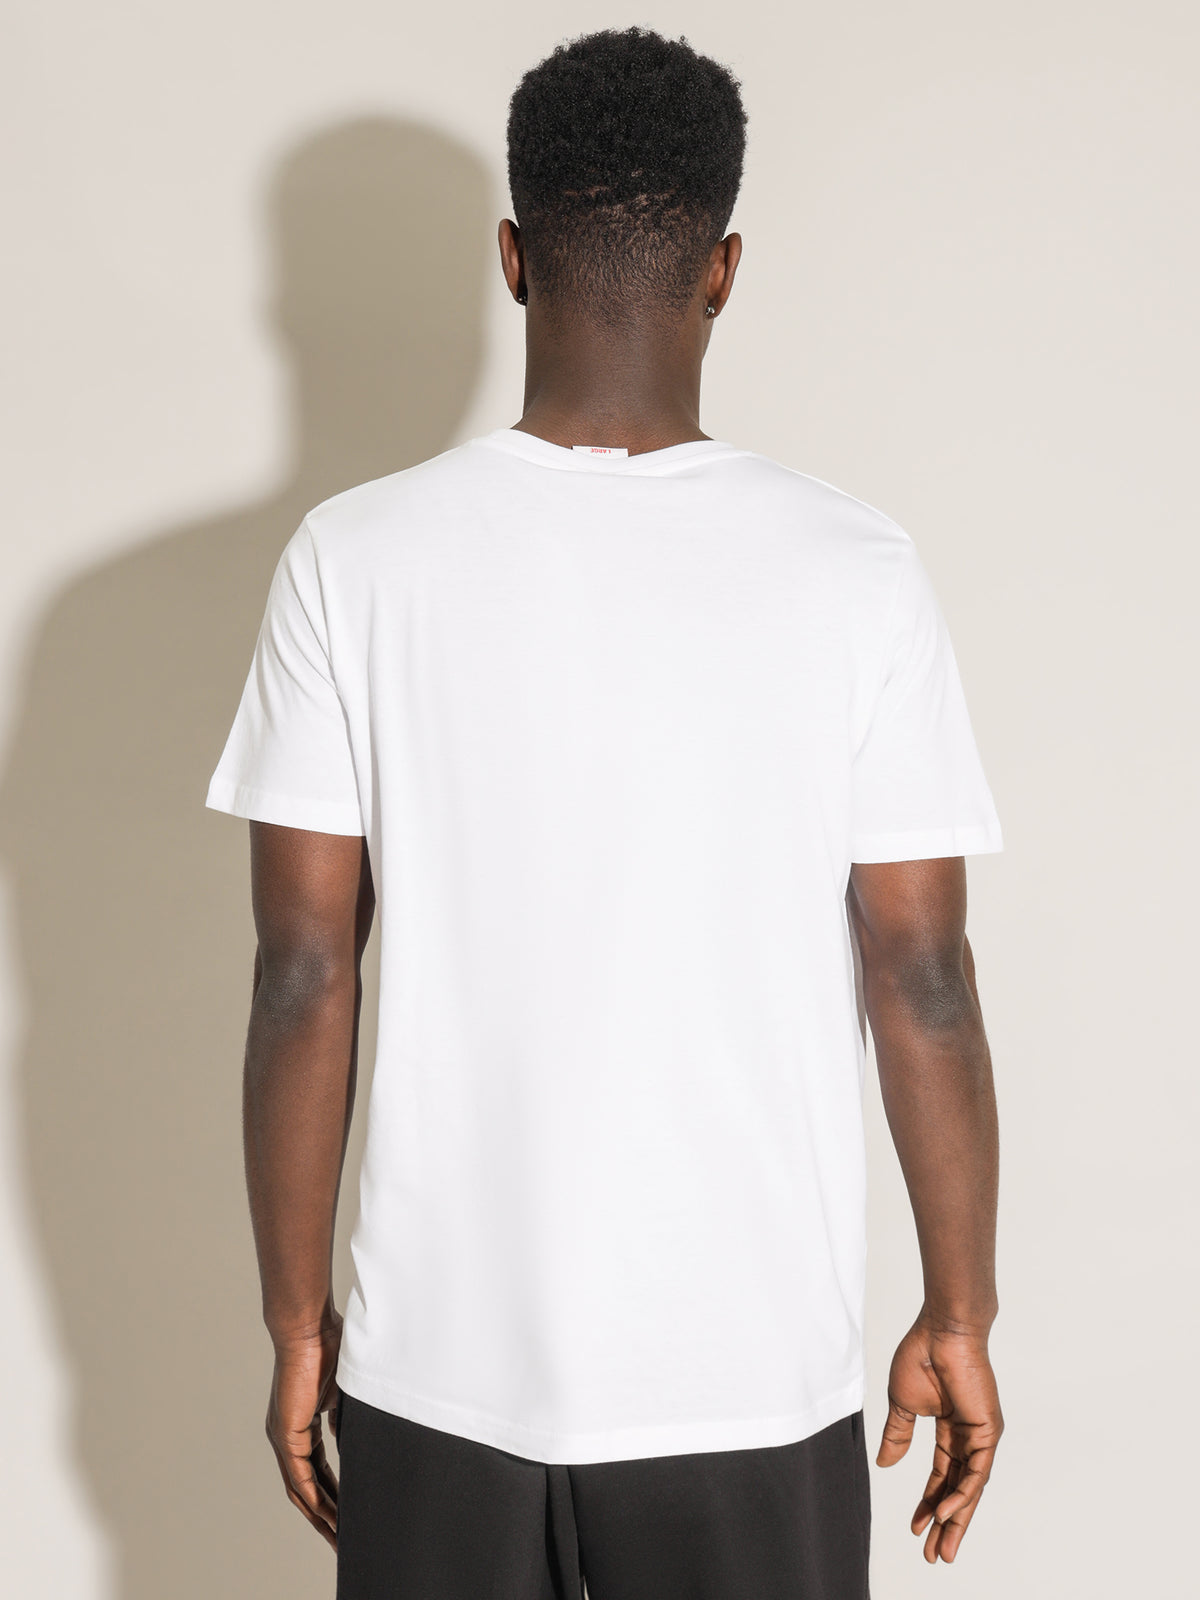 Authentic Dorian T-Shirt in White